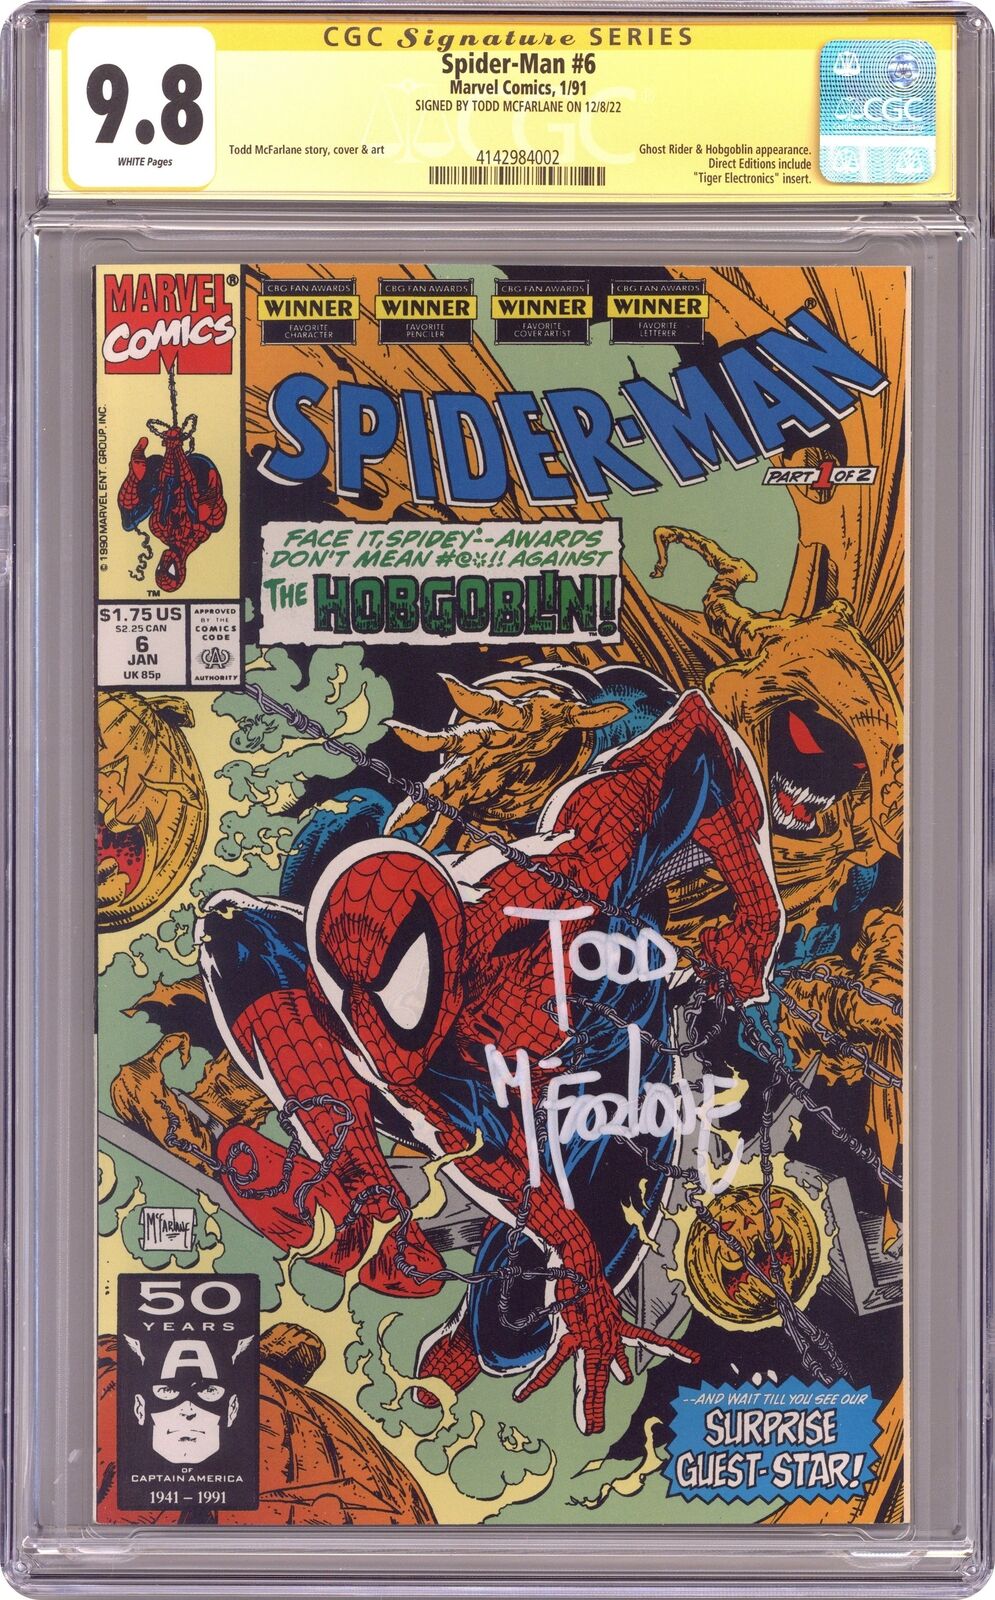 Spider-Man #6 CGC 9.8 SS McFarlane 1991 4142984002